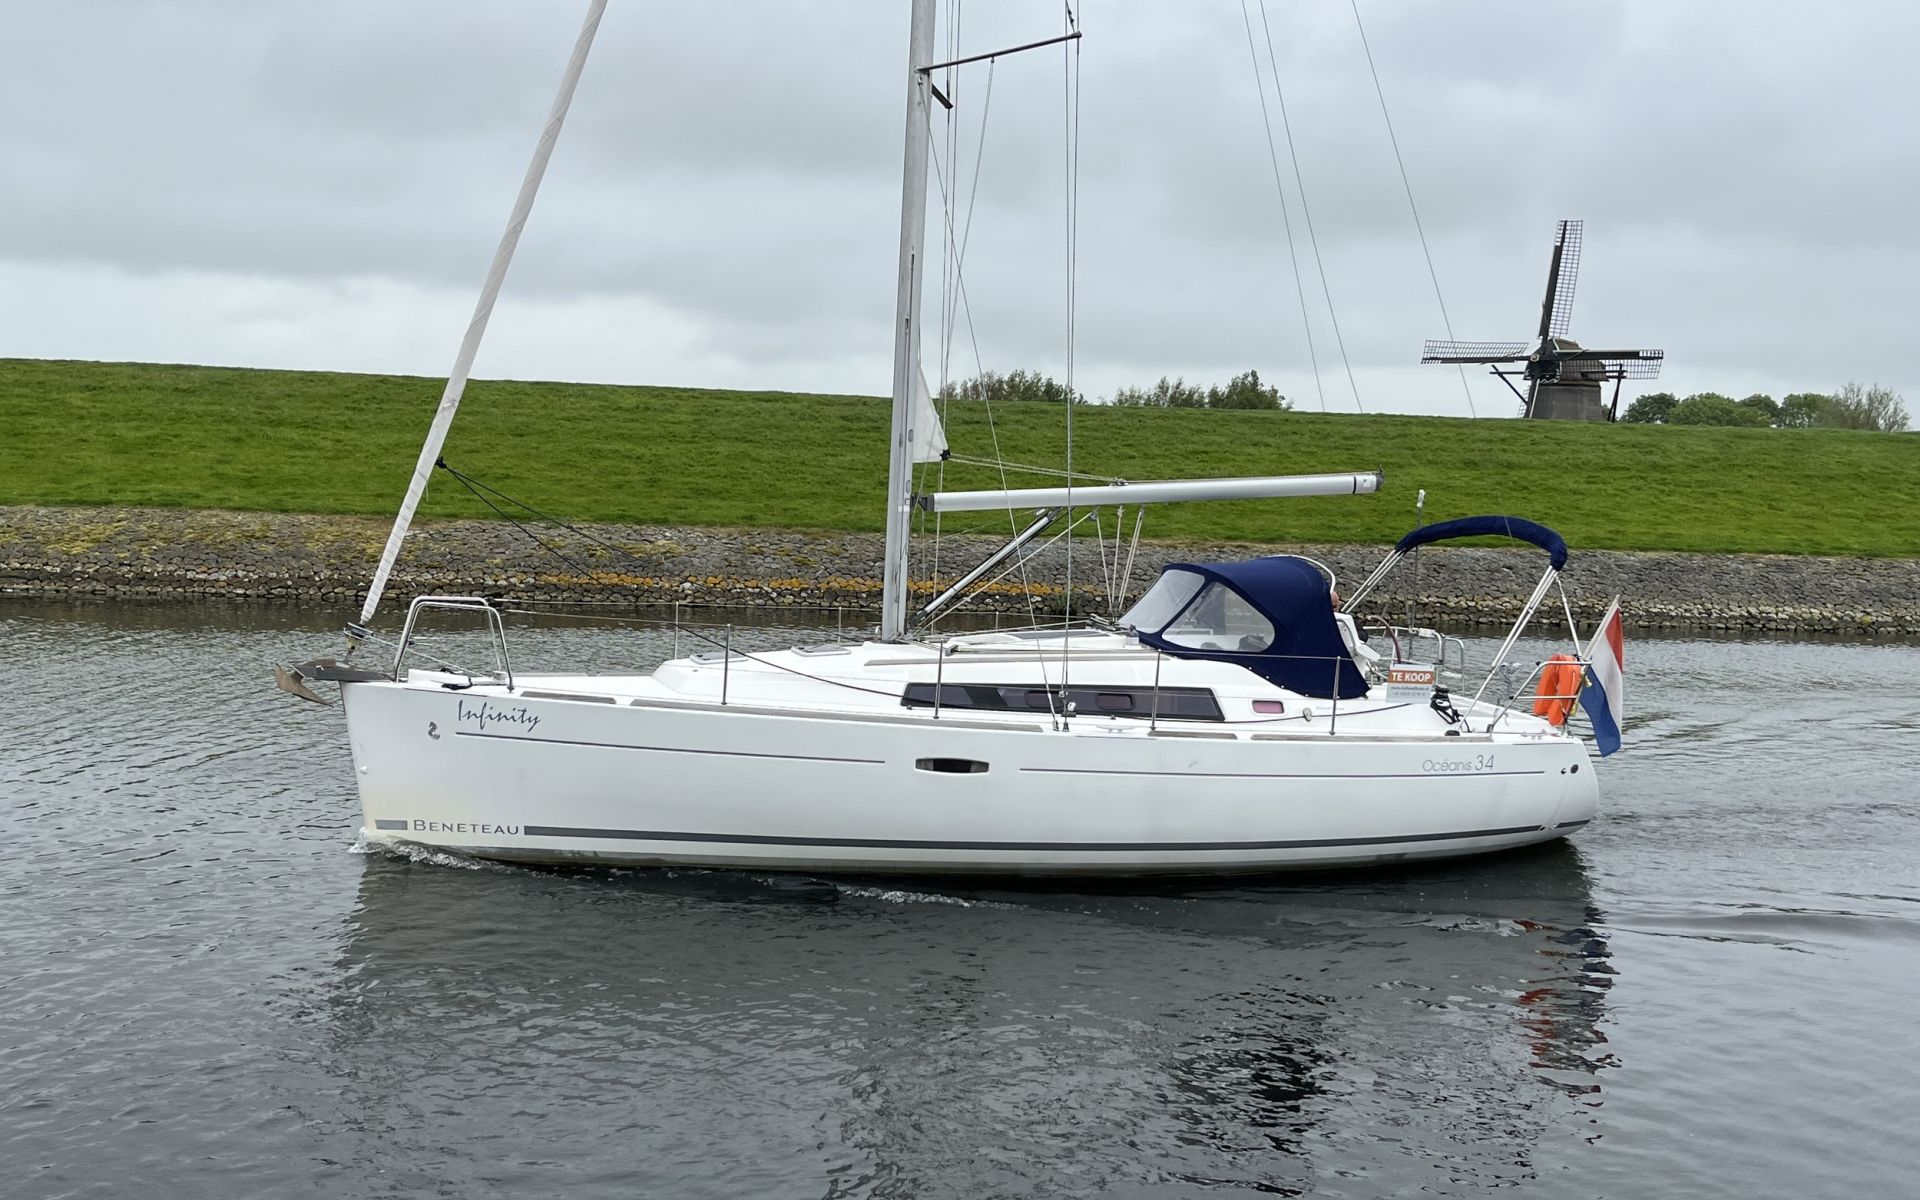 Beneteau Oceanis 34, Segelyacht for sale by HollandBoat International Yachtbrokers